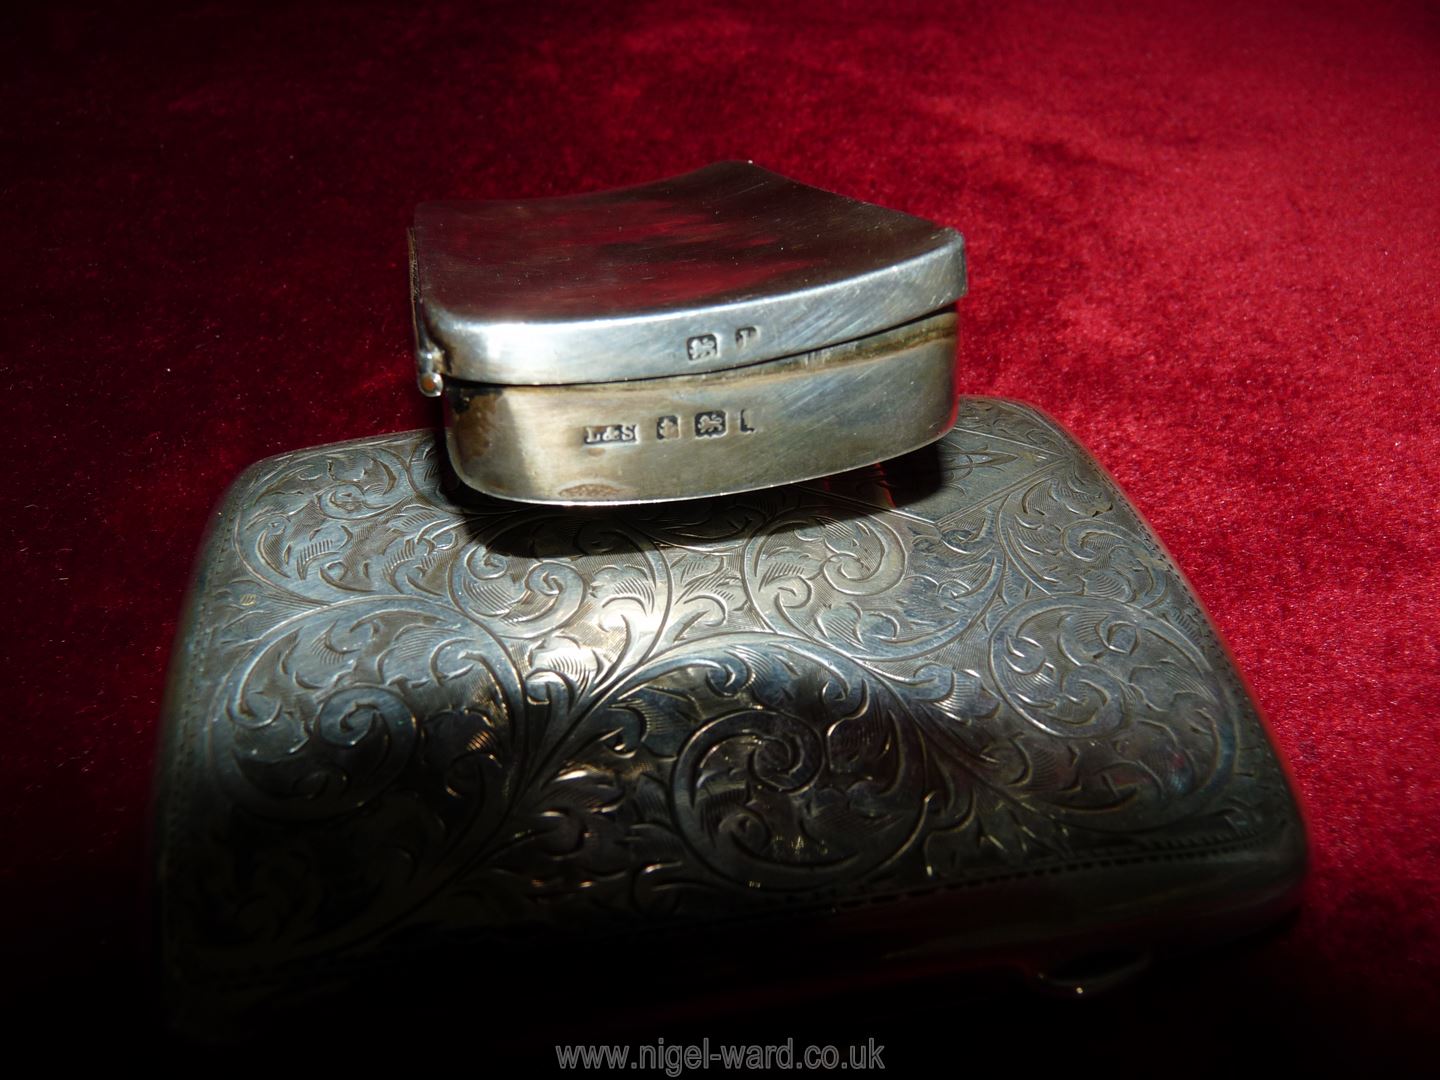 A Silver cigarette case with engraved decoration, Birmingham 1923, maker J&G Ltd. - Image 4 of 4